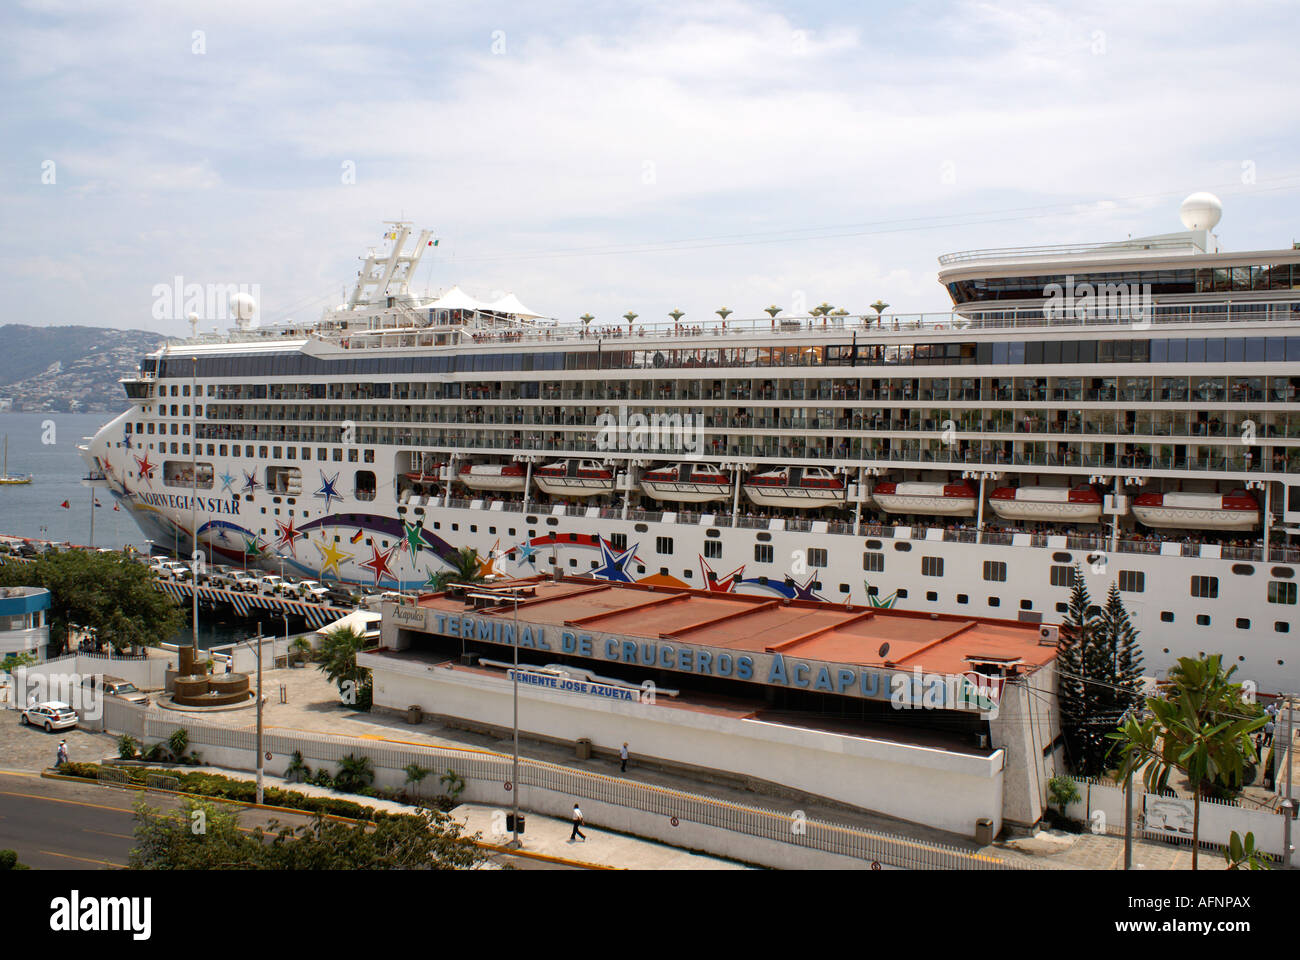 Cruise ship docked at the cruise ship terminal in Acapulco, Mexico Stock  Photo - Alamy